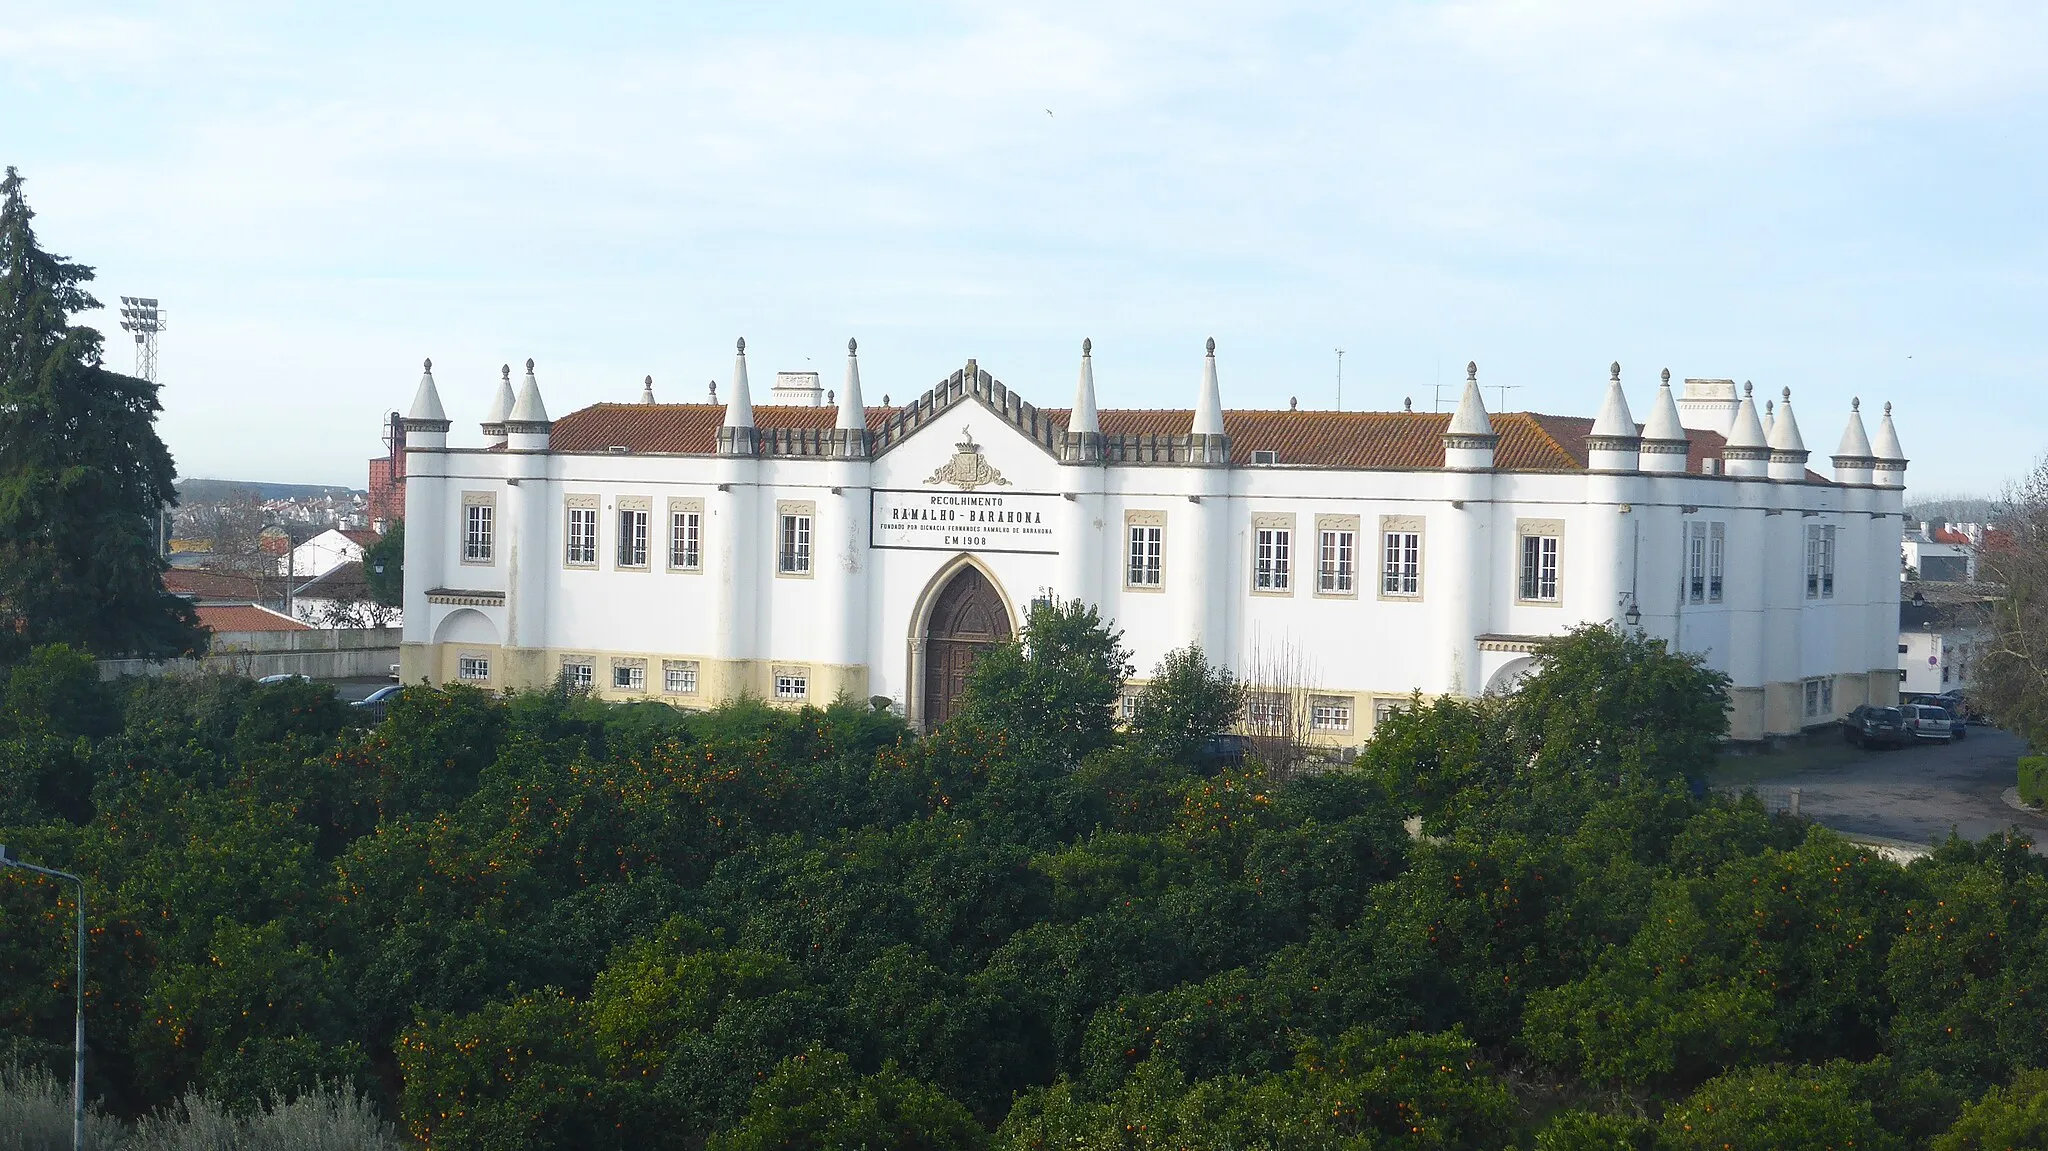 Photo showing: Ramalho-Barahona, private hospital, viewed from Vitoria Stone hotel